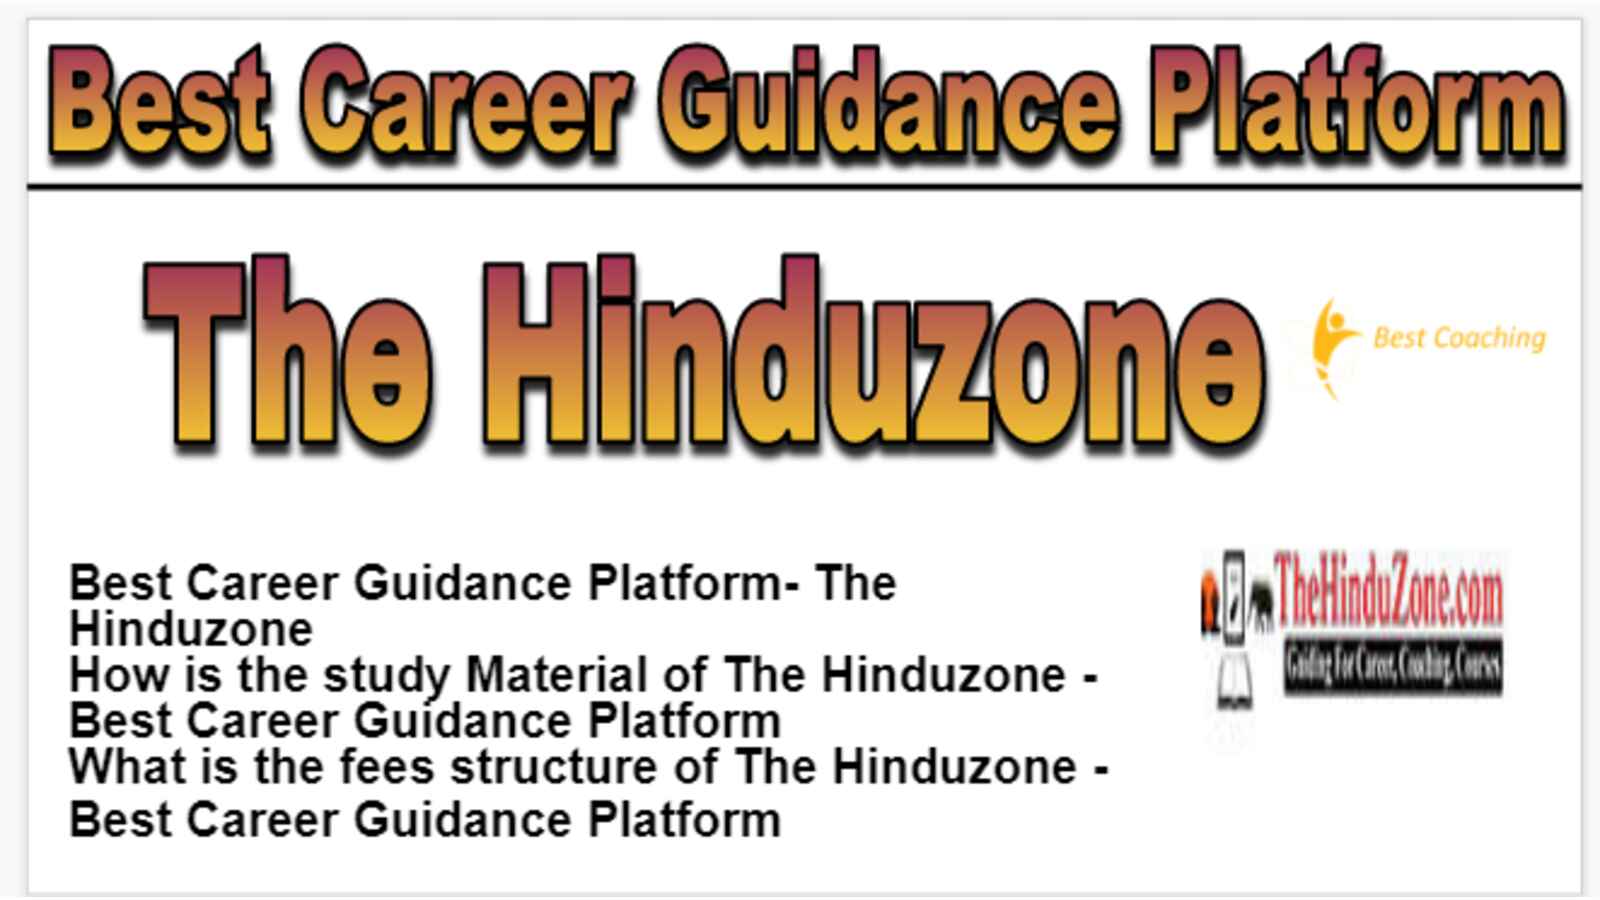 The Hinduzone Best Career Guidance Platform.